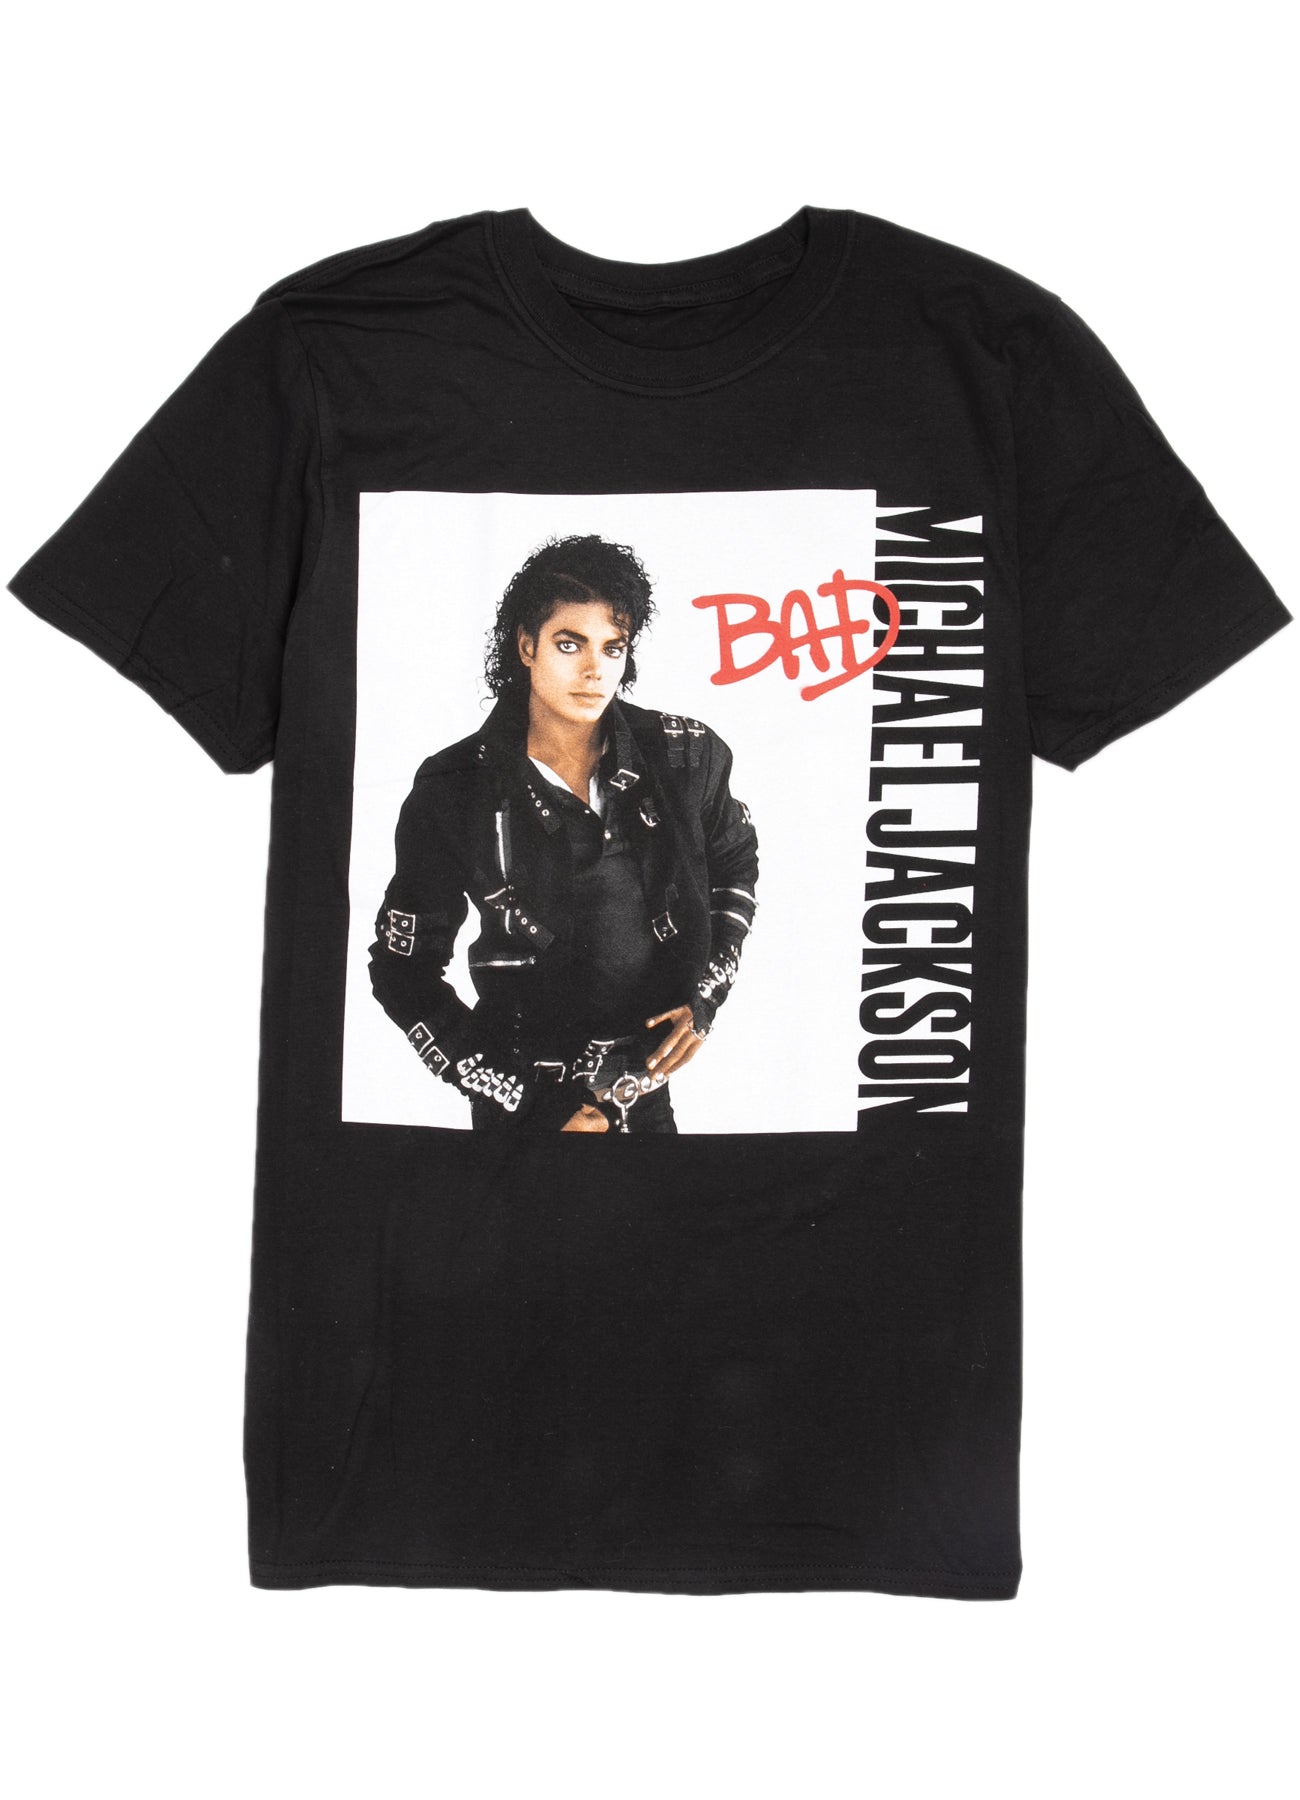 Michael Jackson t-shirt size XXL